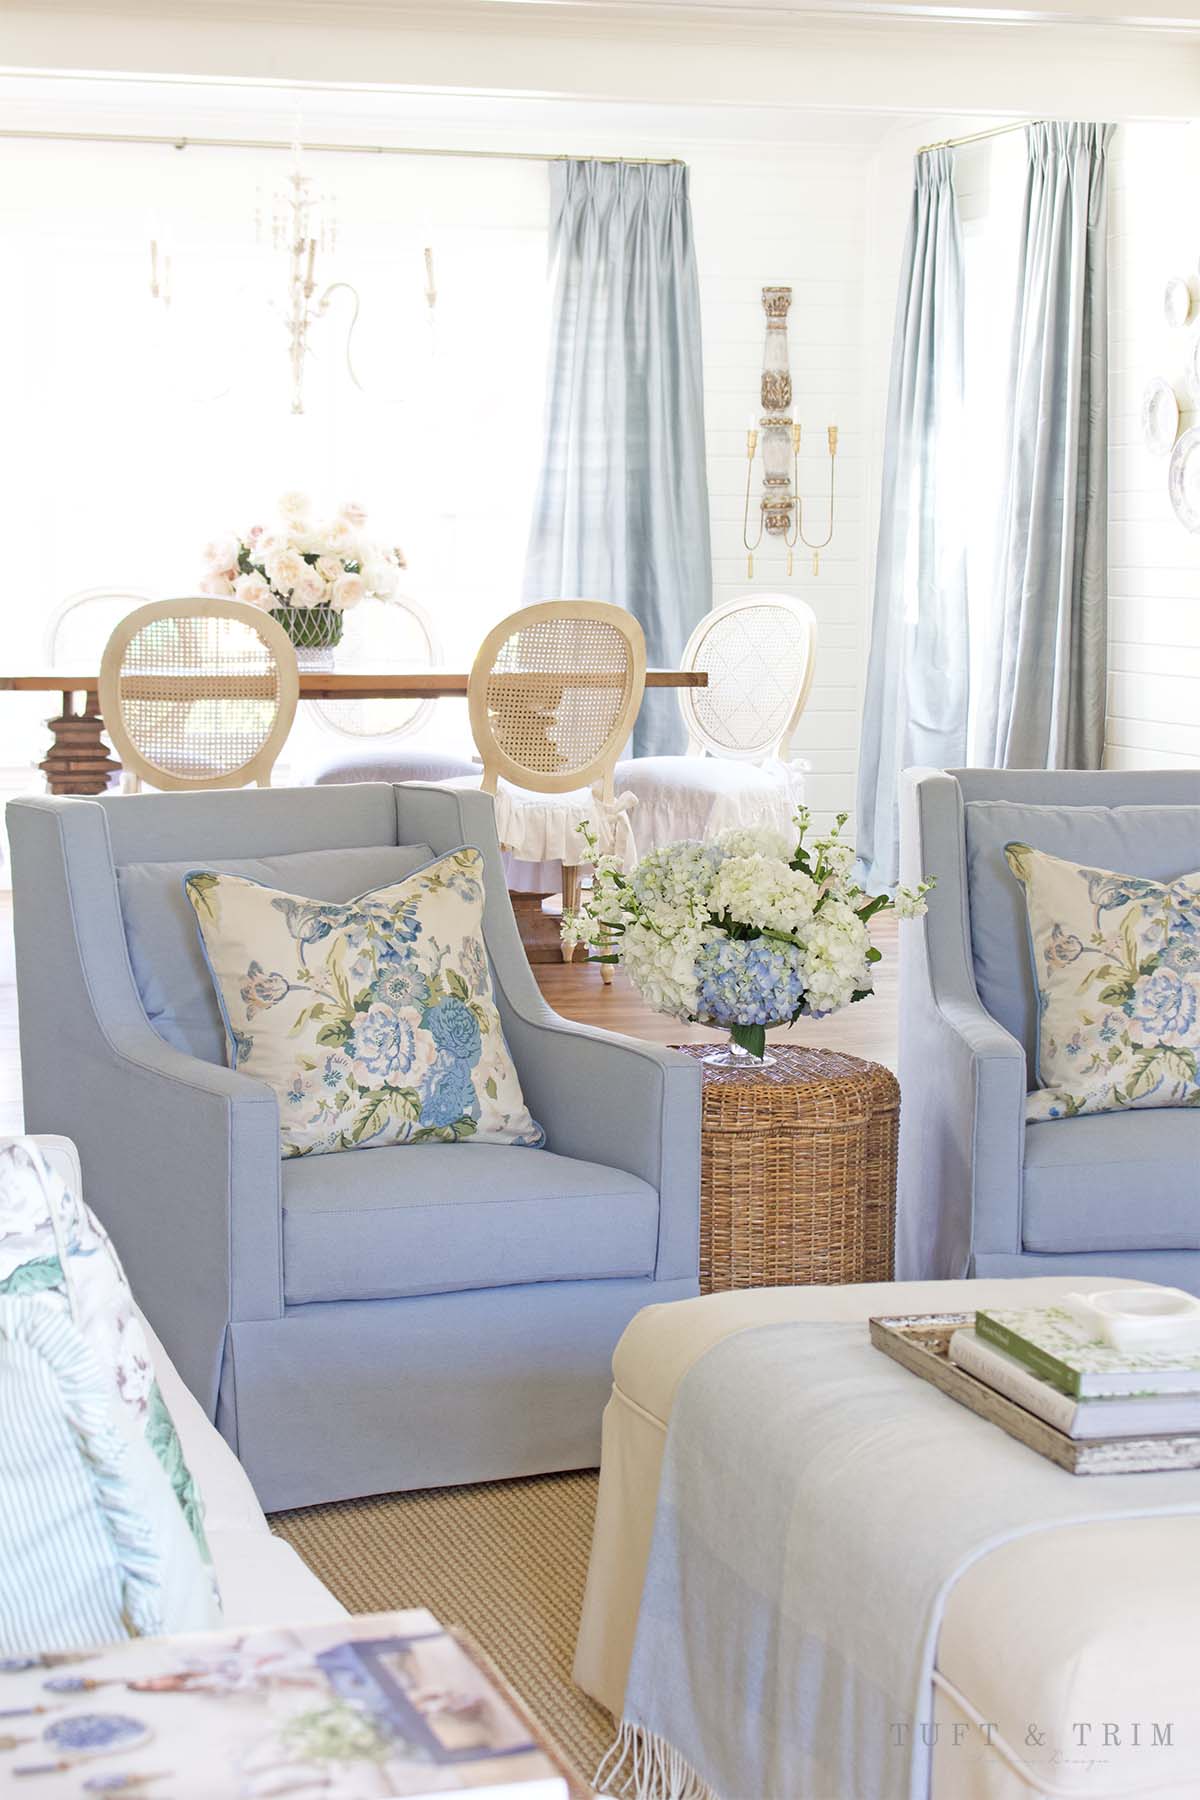 Creating an Elegant & Cozy Living Room with Tuft & Trim Interiors